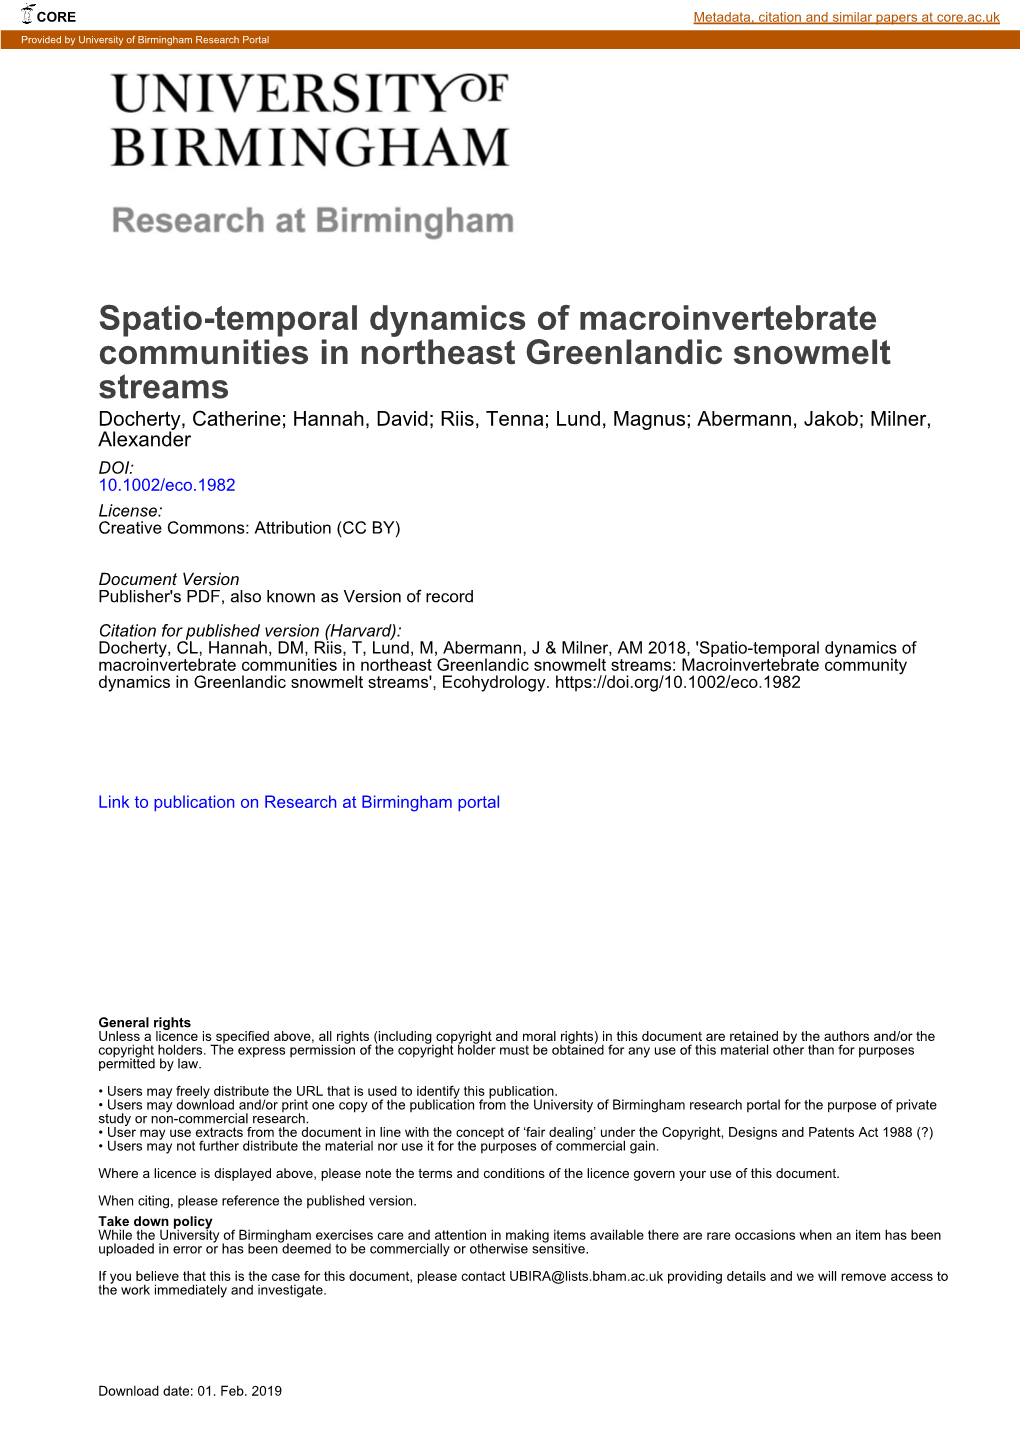 Spatio-Temporal Dynamics of Macroinvertebrate Communities In